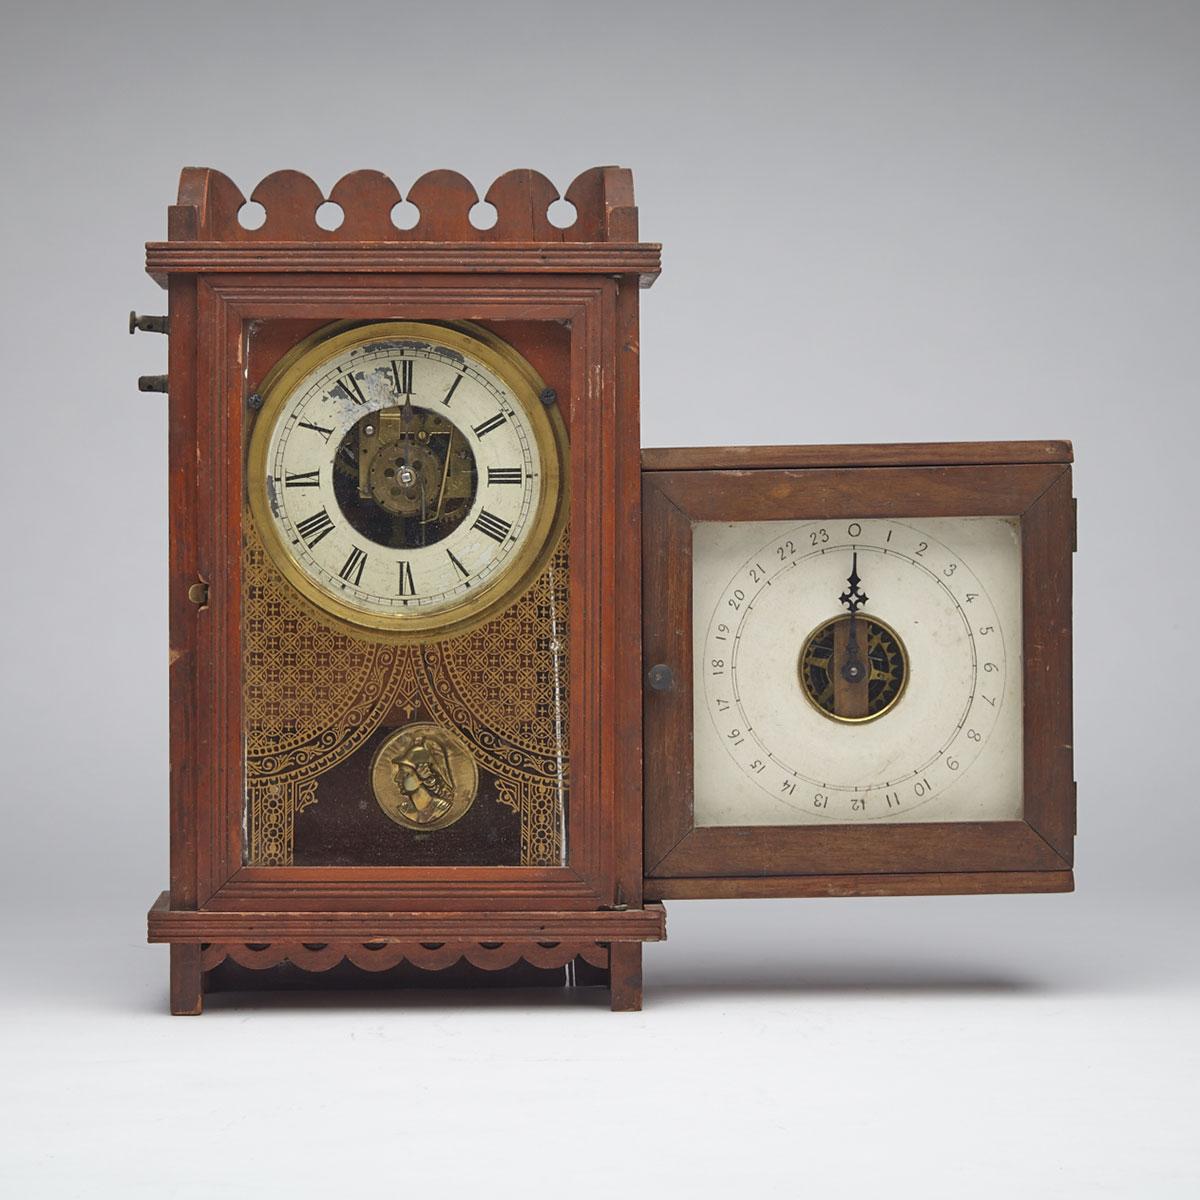 Waterbury Clock Co. Shelf Clock with Supplementary 24 Hour Dial, 19th century